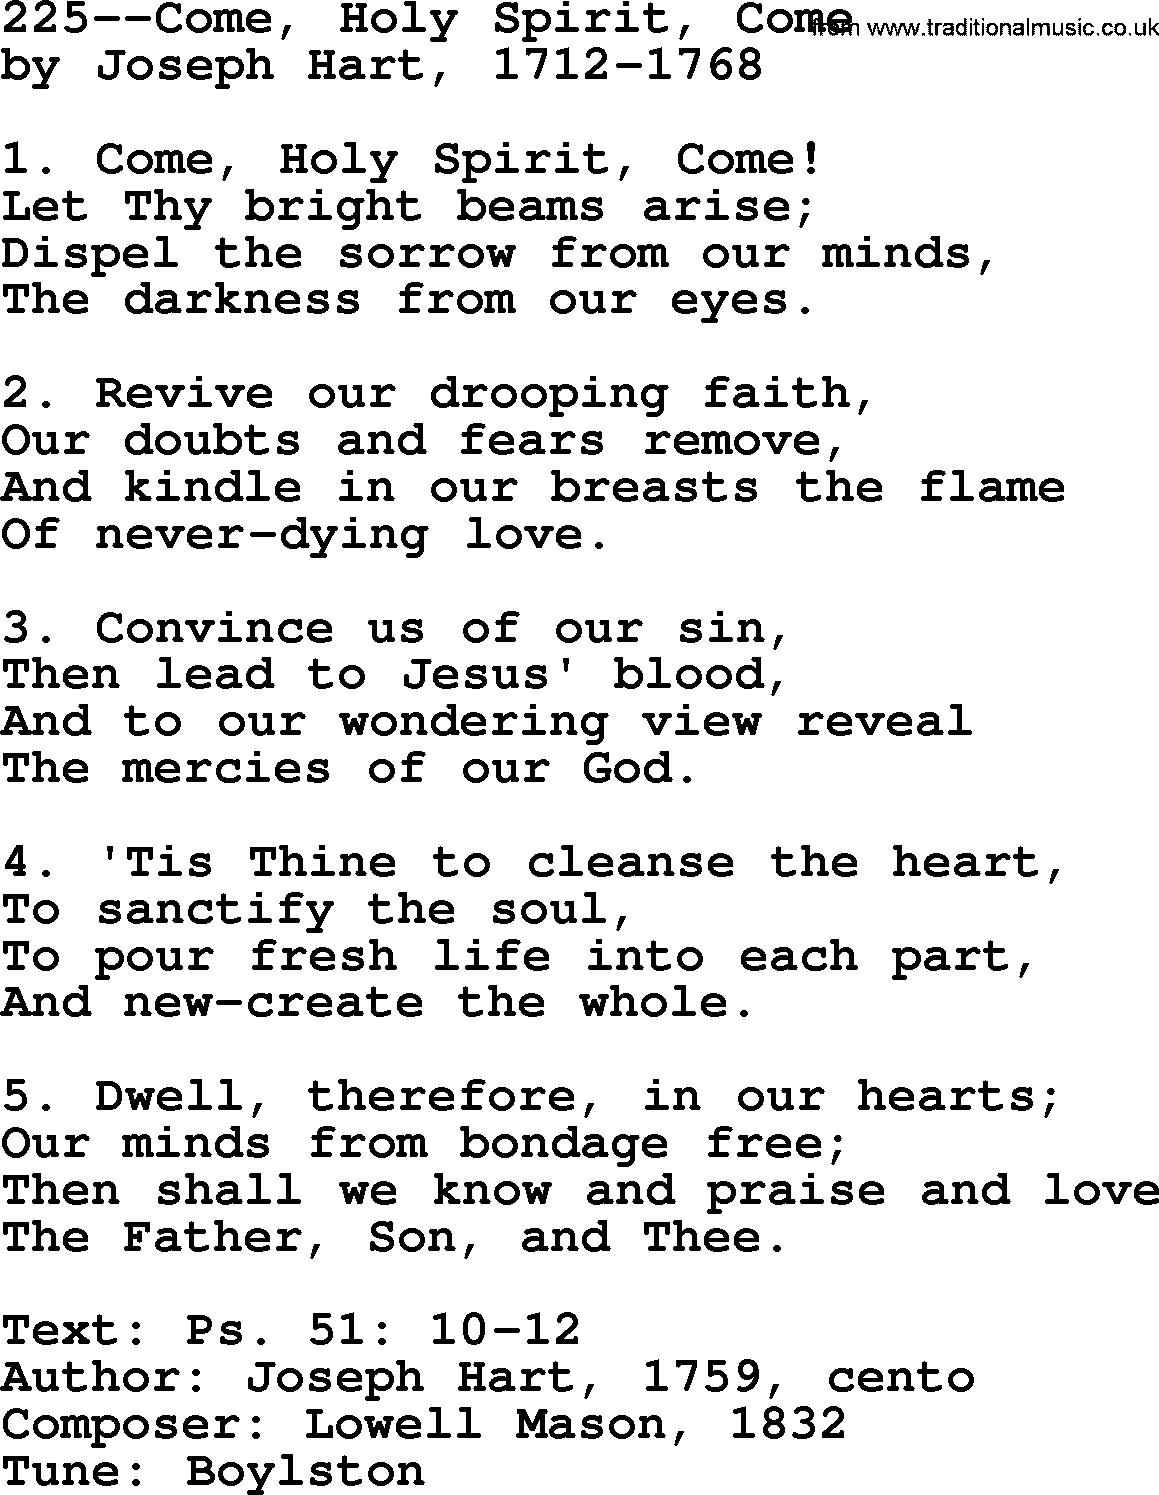 Lutheran Hymn: 225--Come, Holy Spirit, Come.txt lyrics with PDF